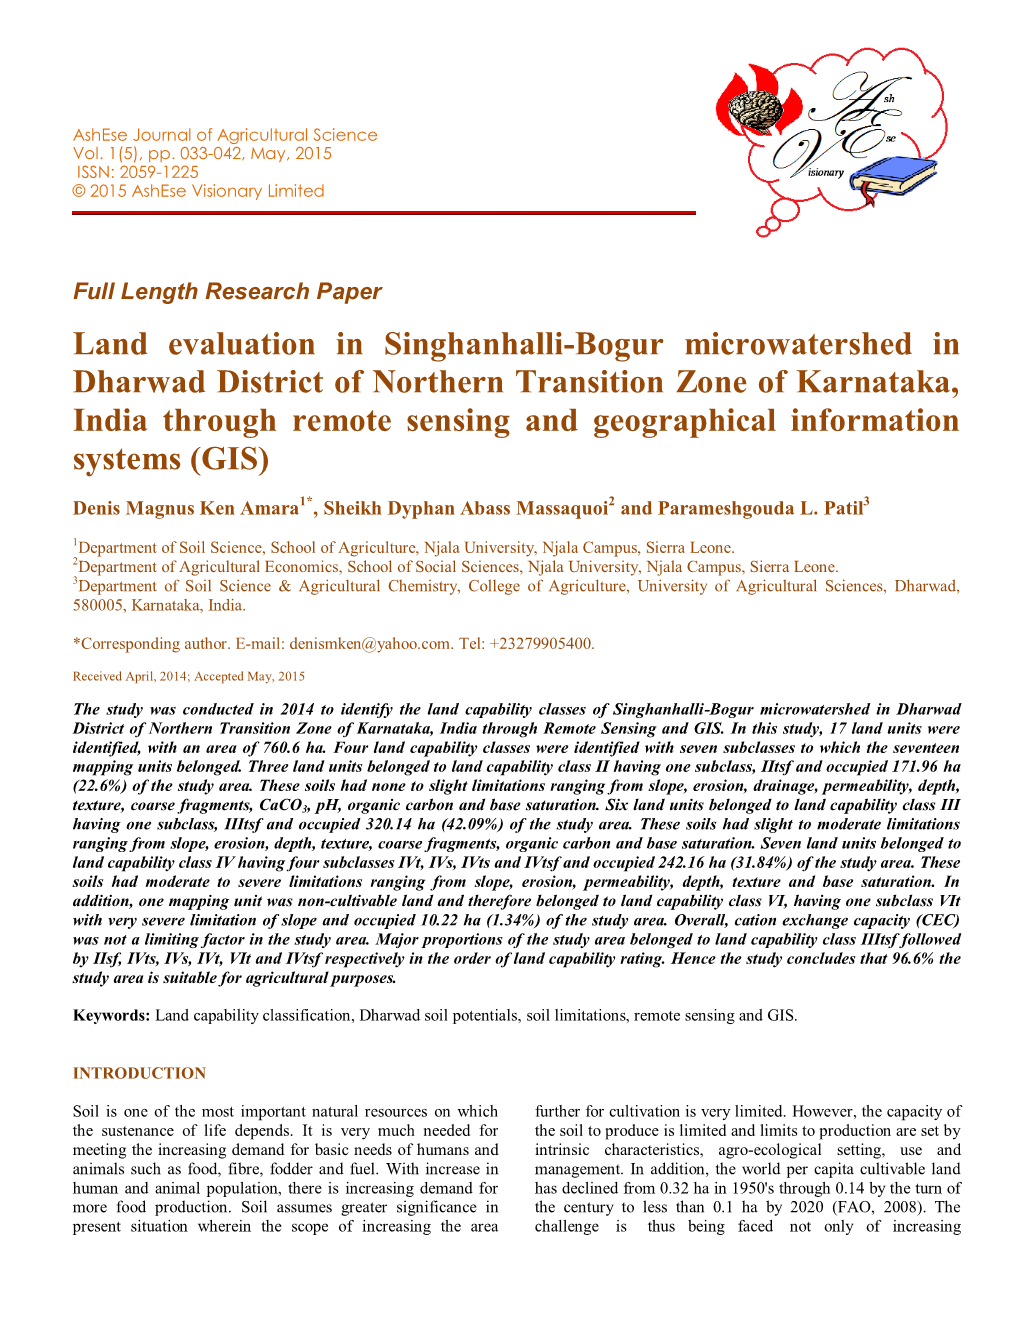 Land Evaluation in Singhanhalli-Bogur